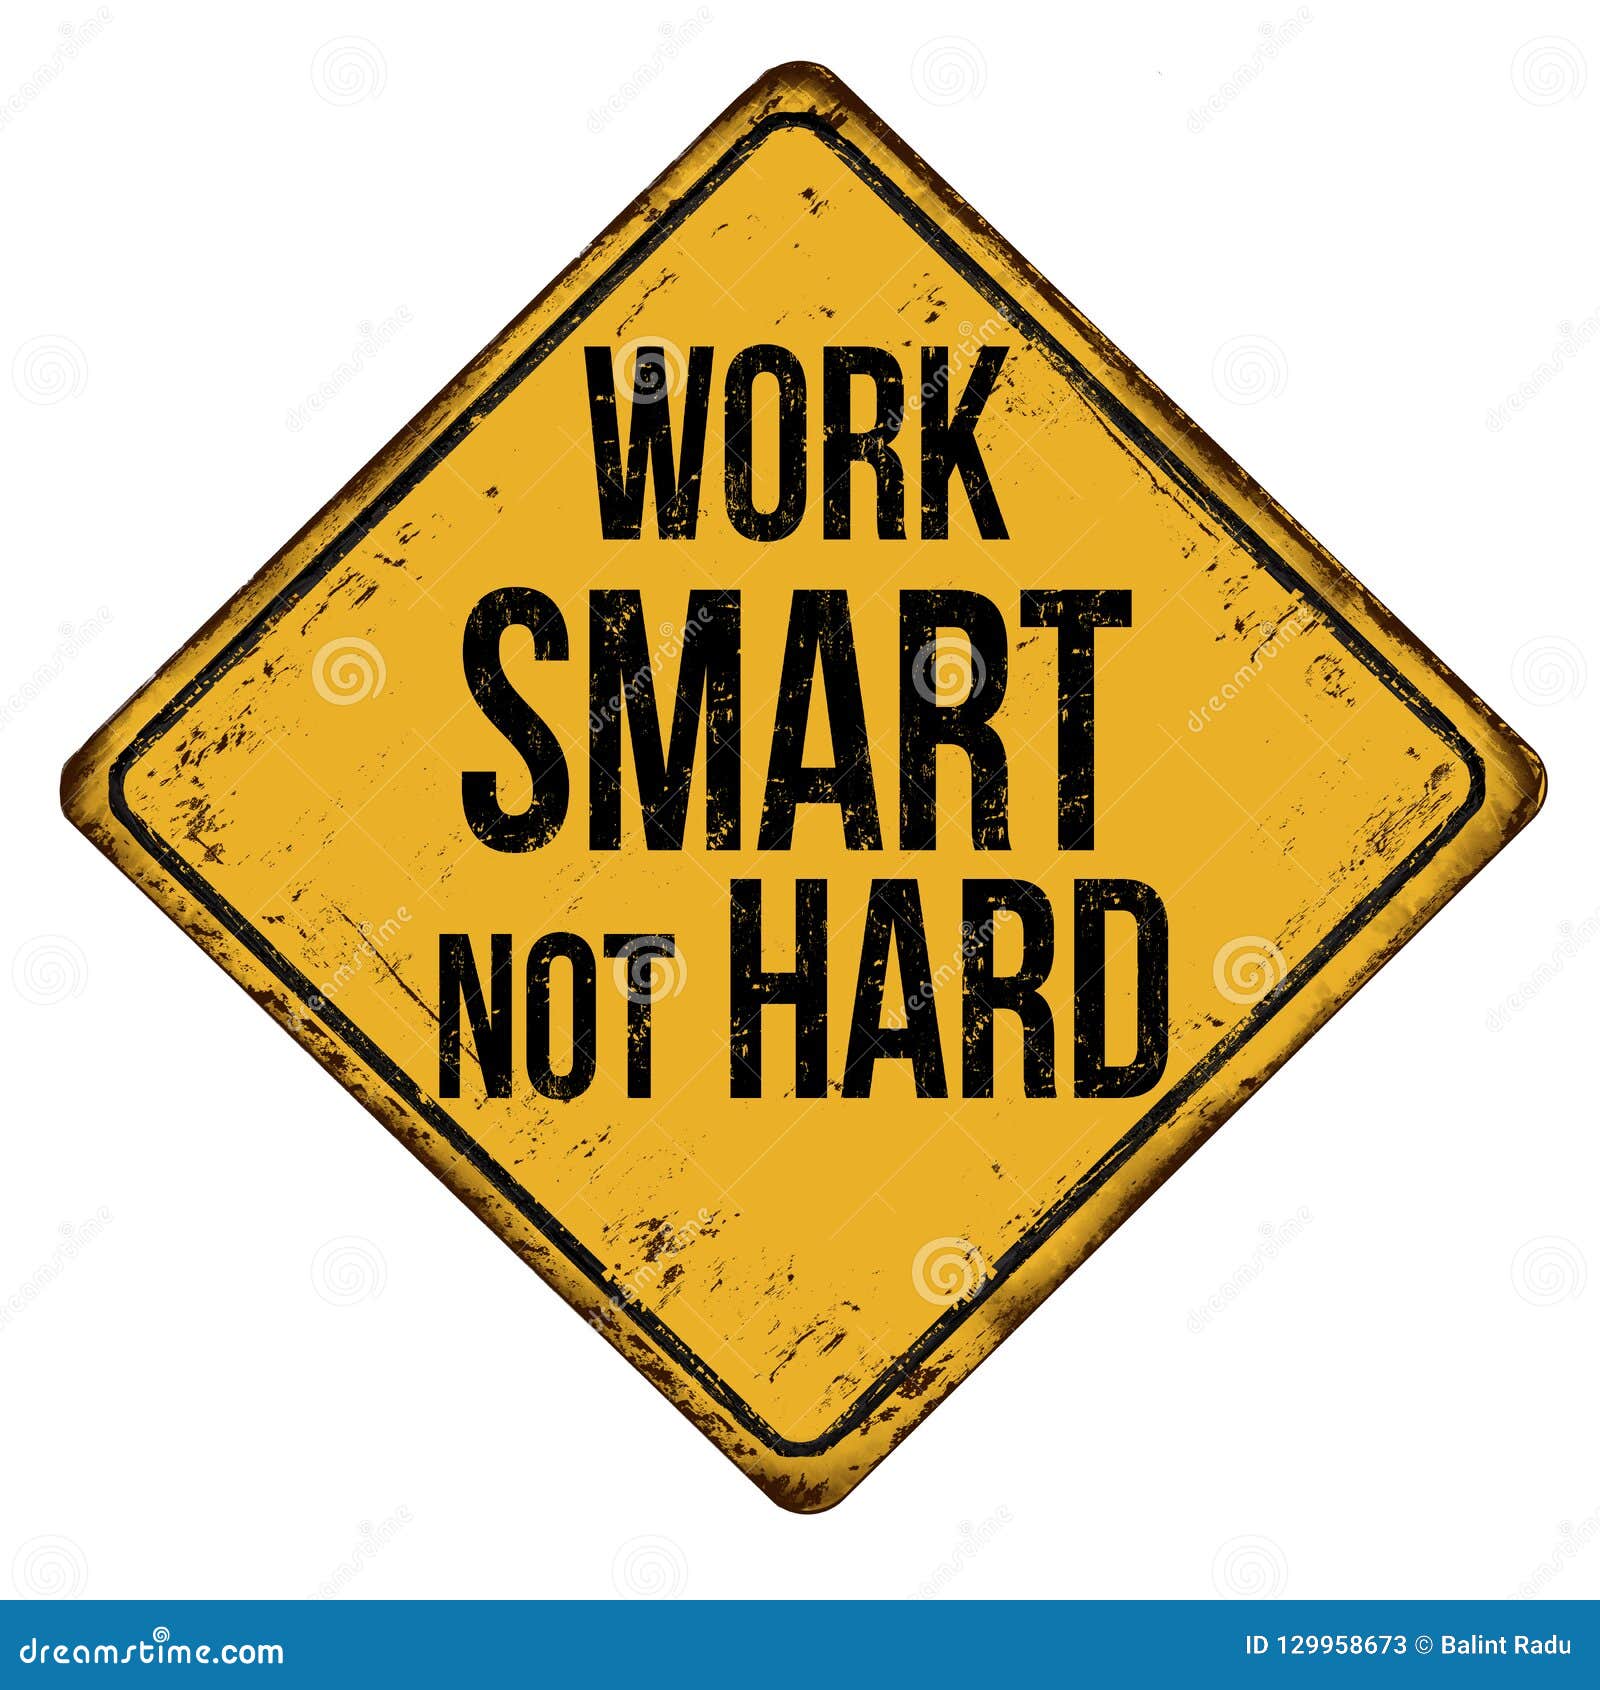 Work Smart Versus Work Hard Royalty-Free Stock Image | CartoonDealer